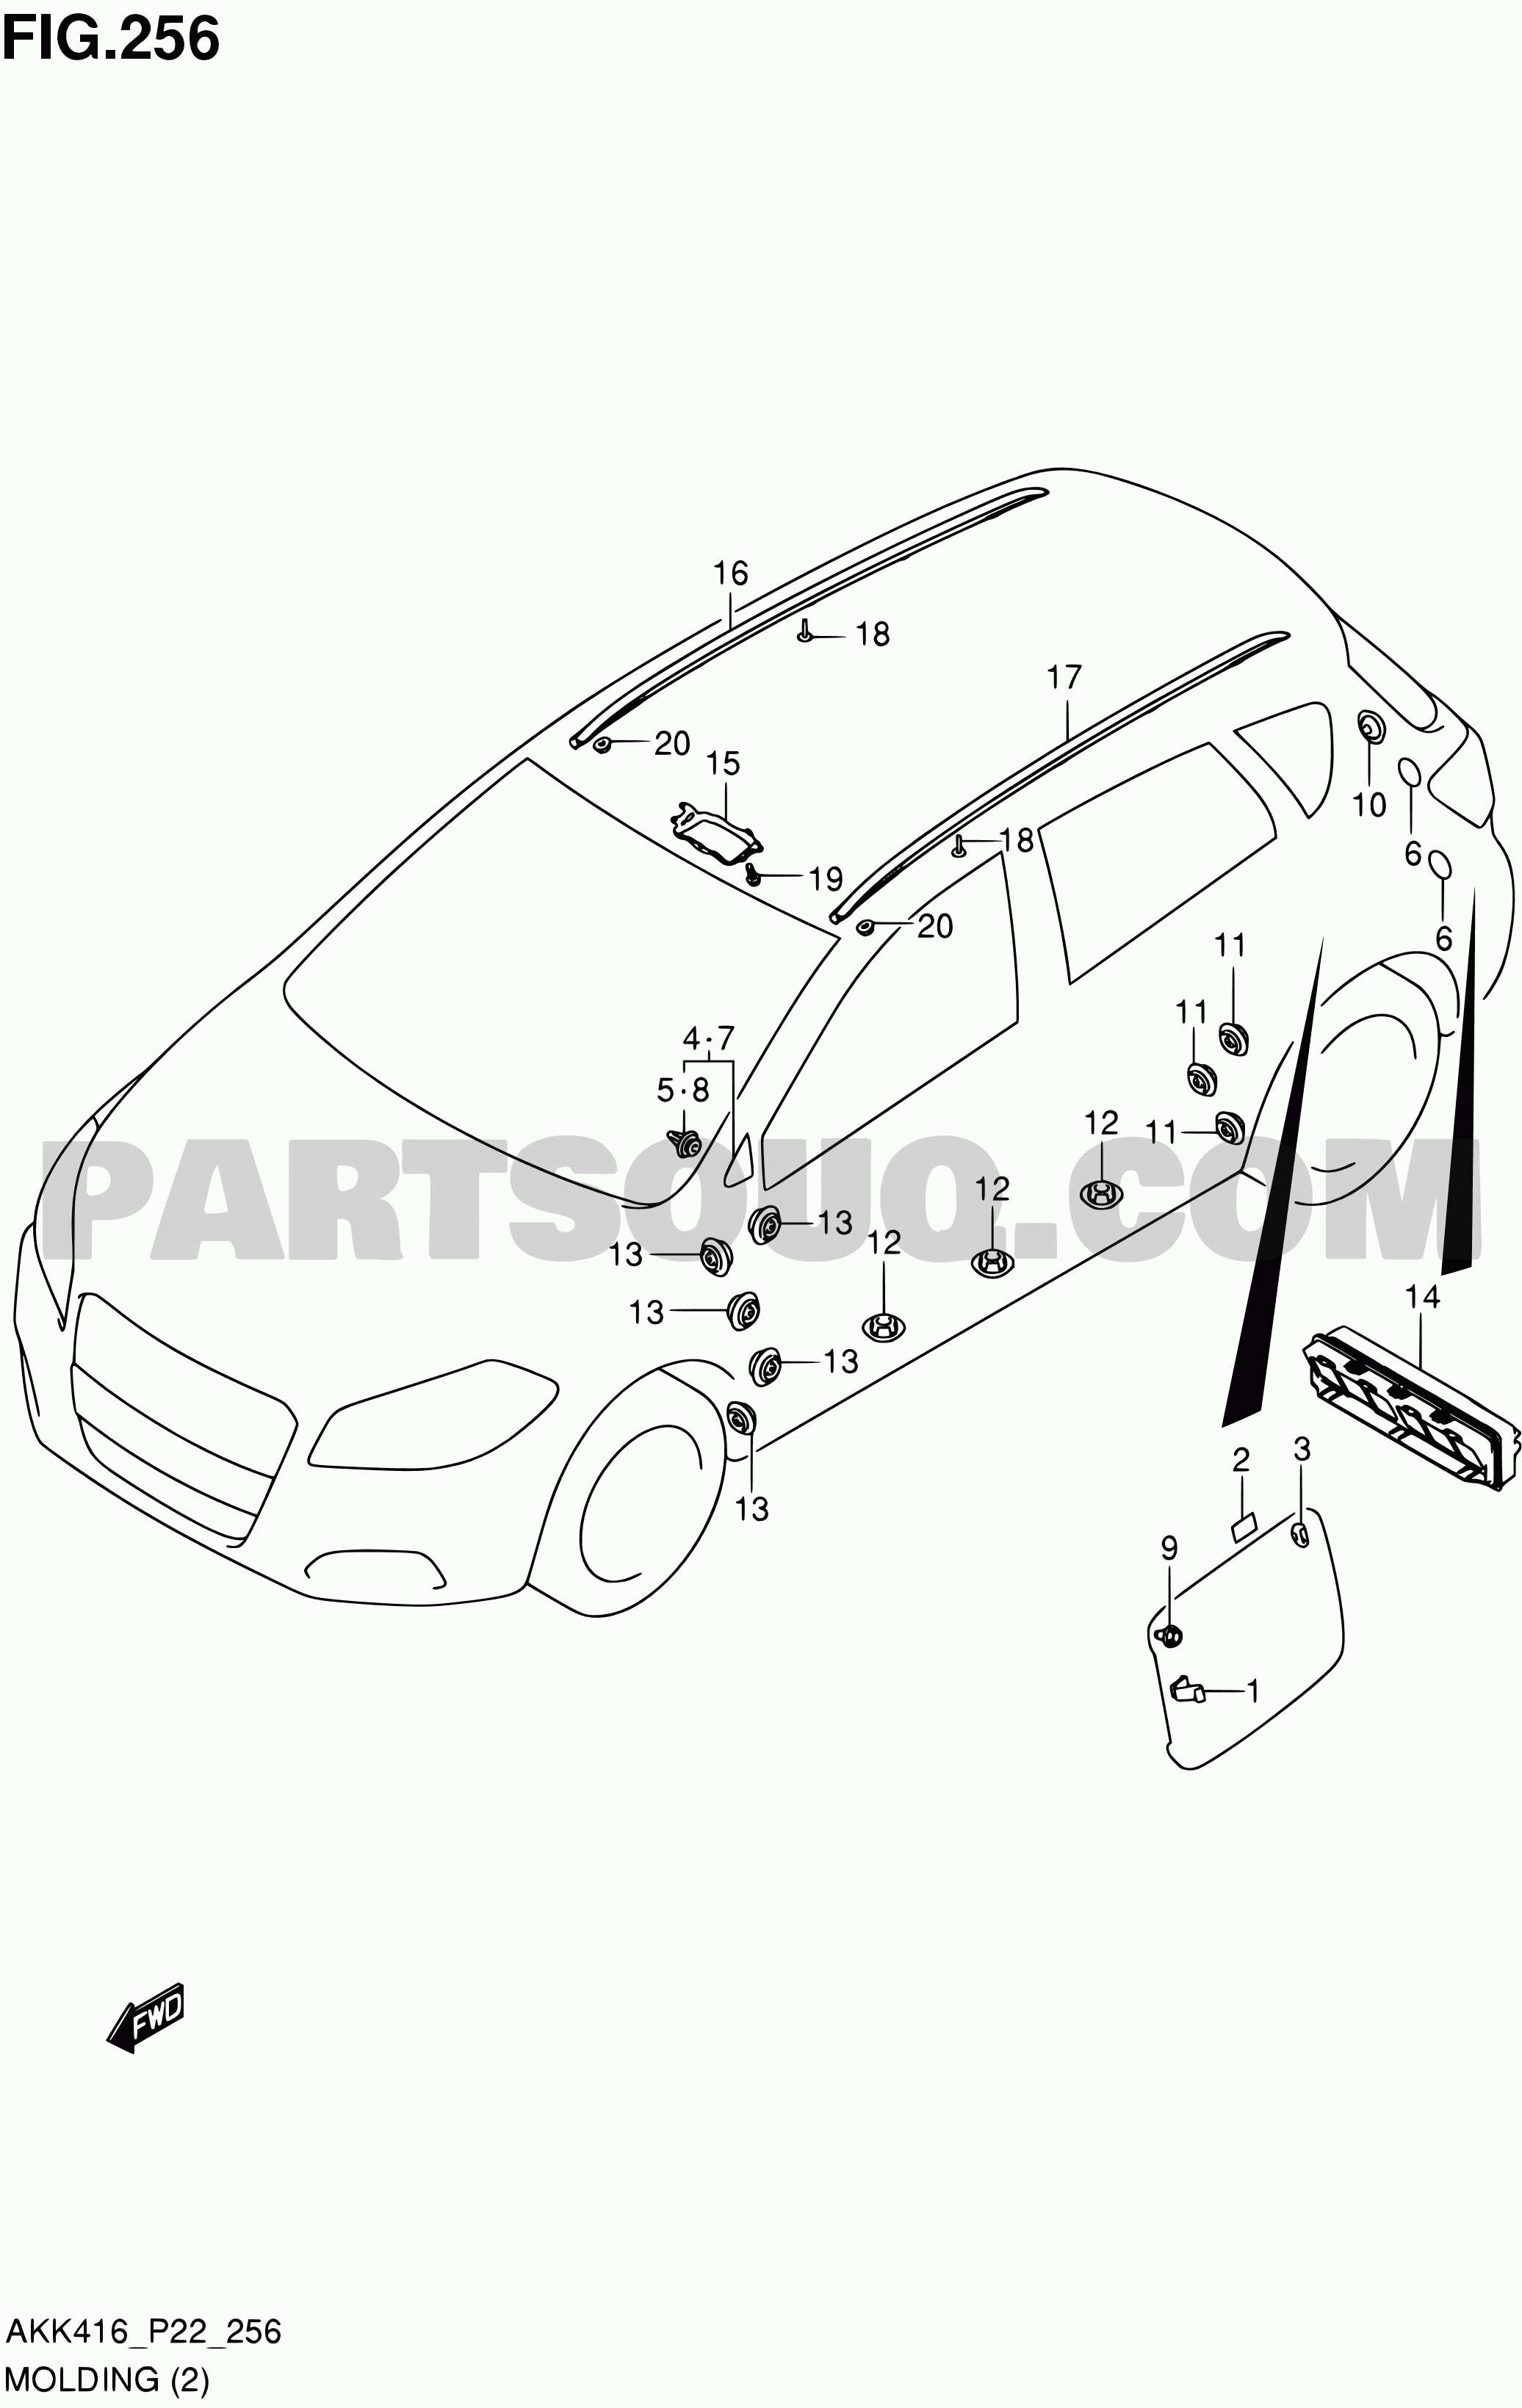 256 - MOLDING (W/ROOF RAIL) | Suzuki SX4 AKK416 AKK416 (P02,P22 